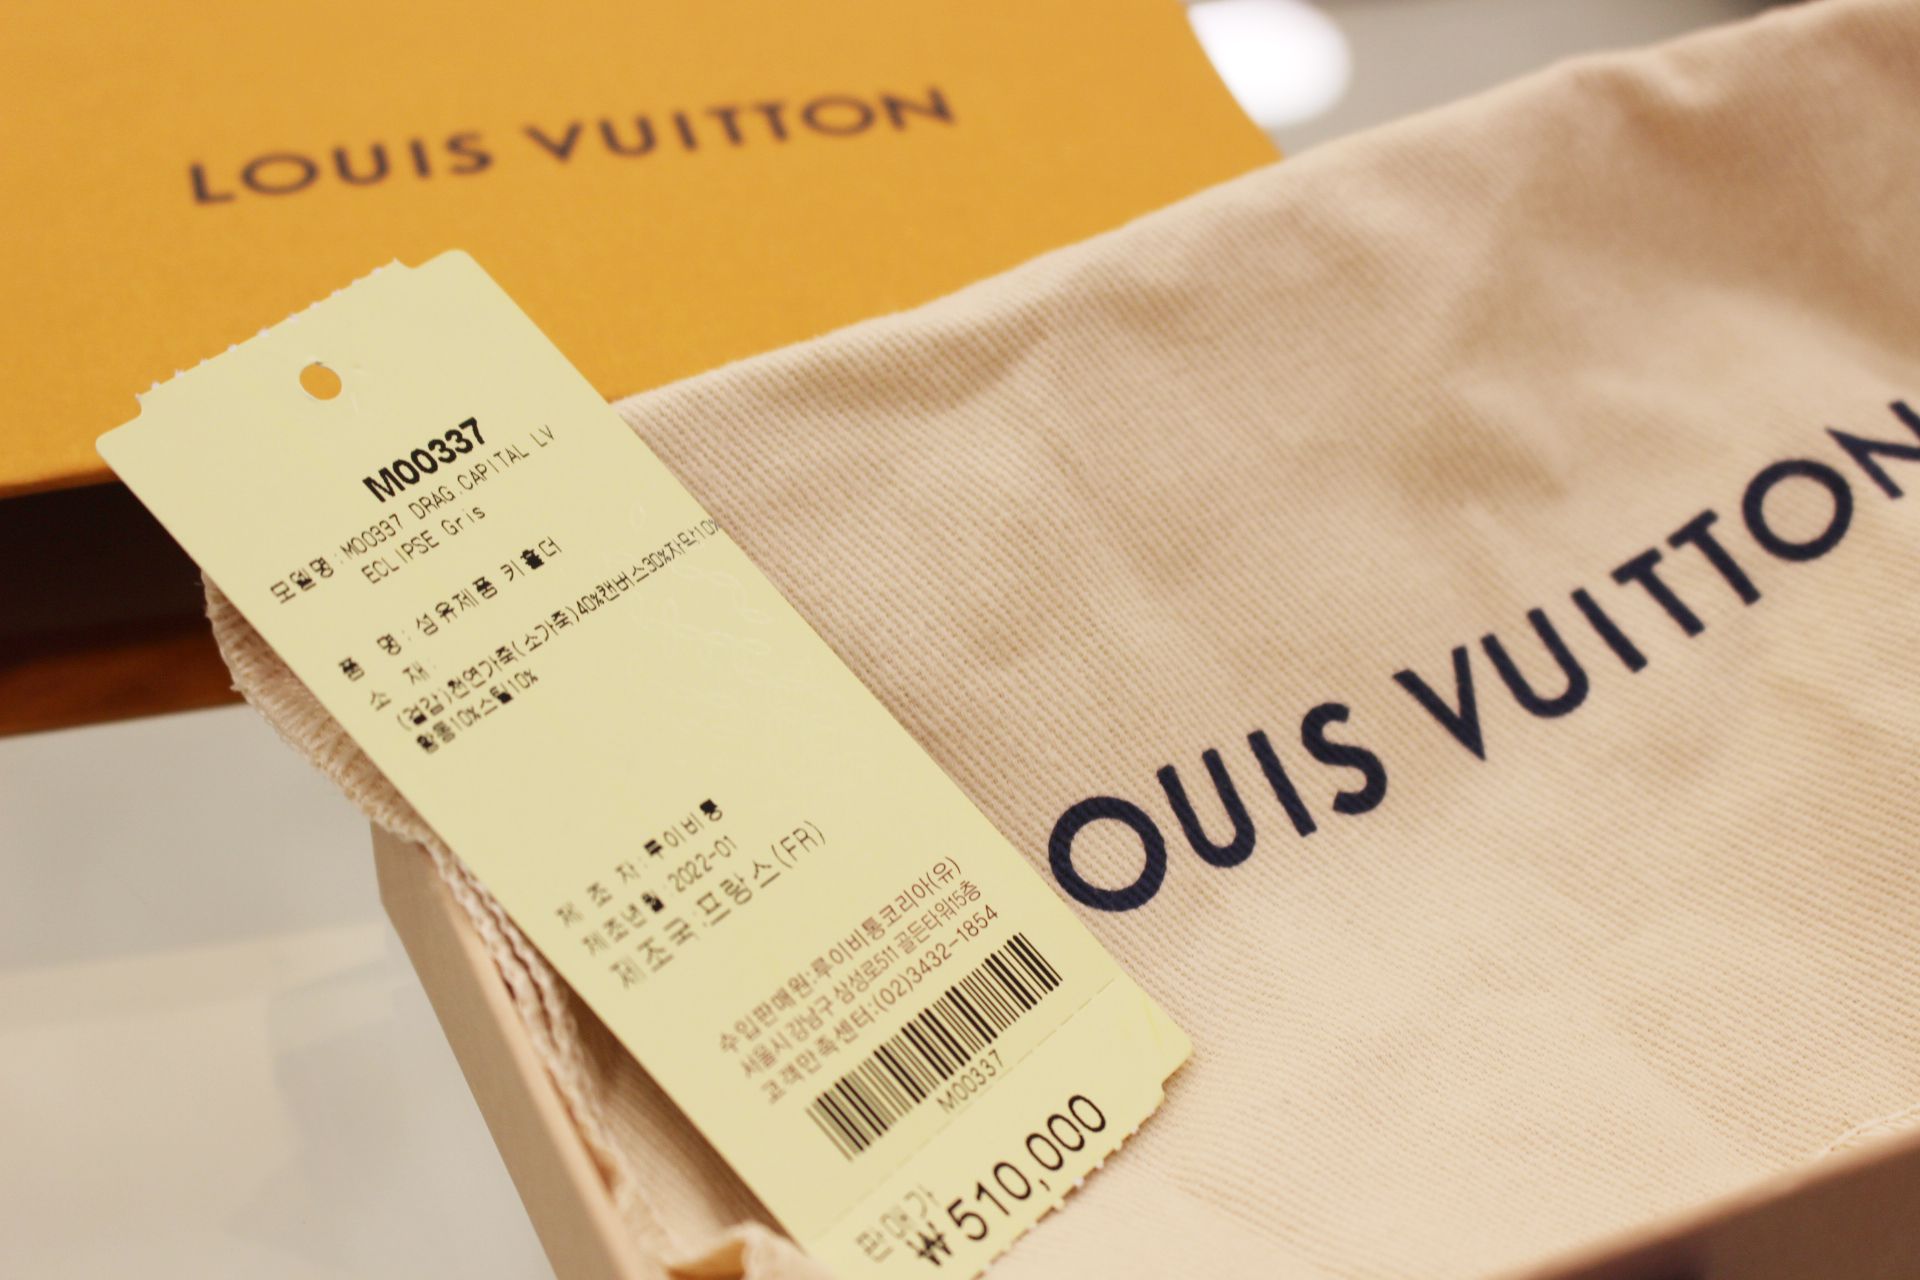 Louis Vuitton Capital lv bag charm and key holder (M00337)